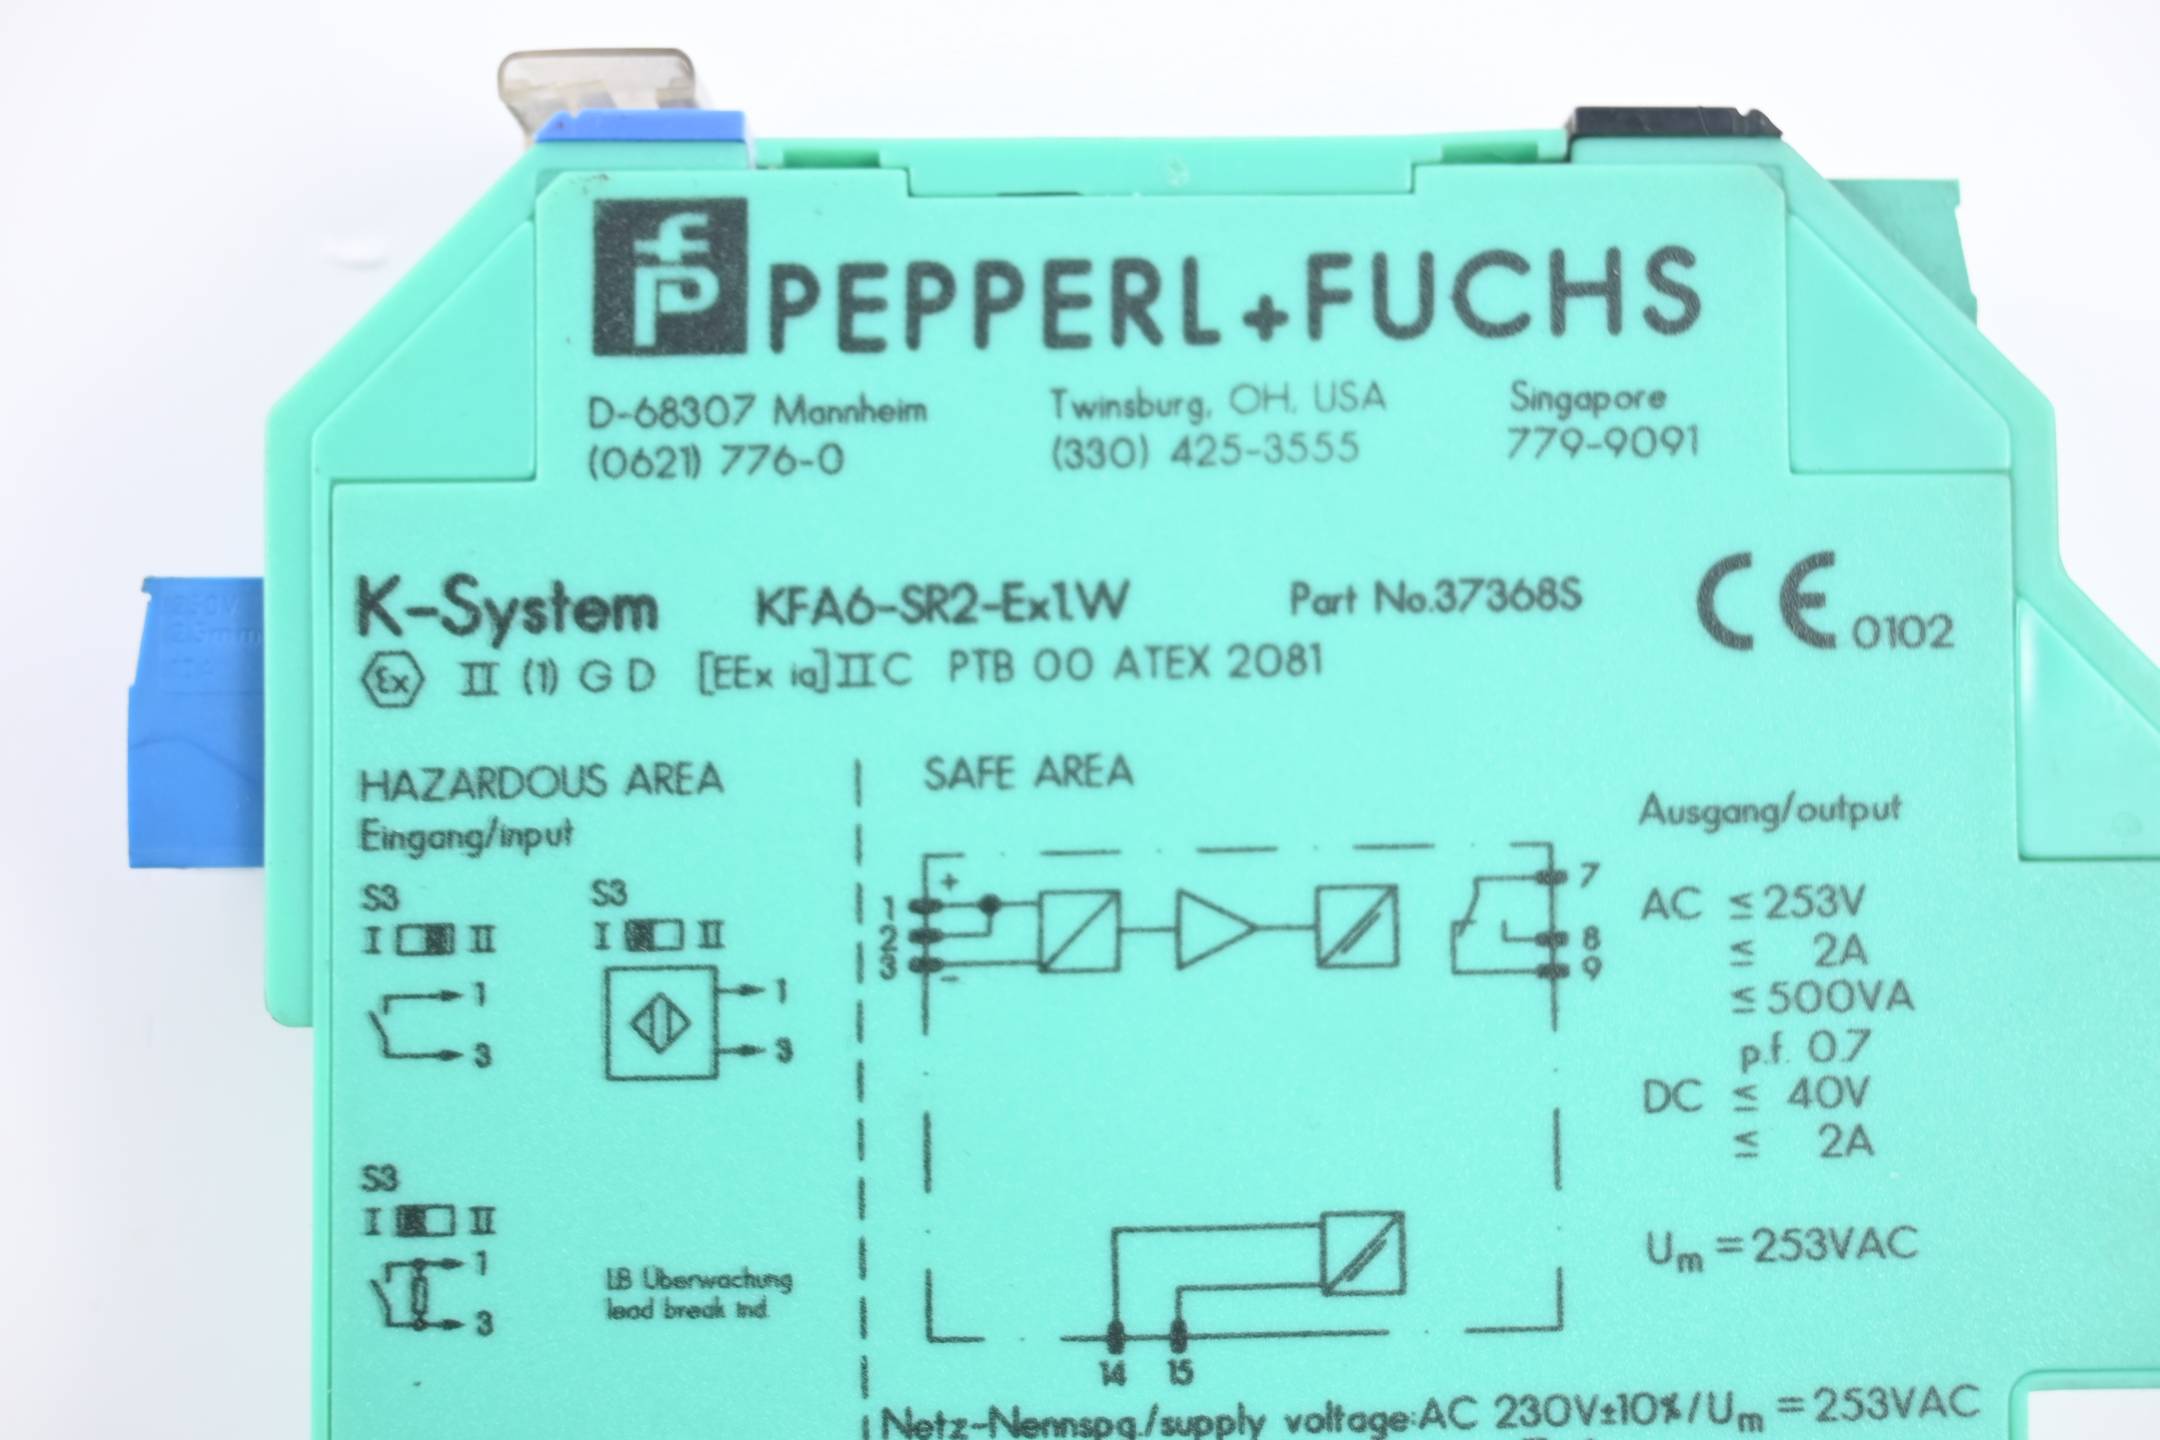 Pepperl+Fuchs Trennschaltverstärker KFA6-SR2-Ex1.W ( 37368S )